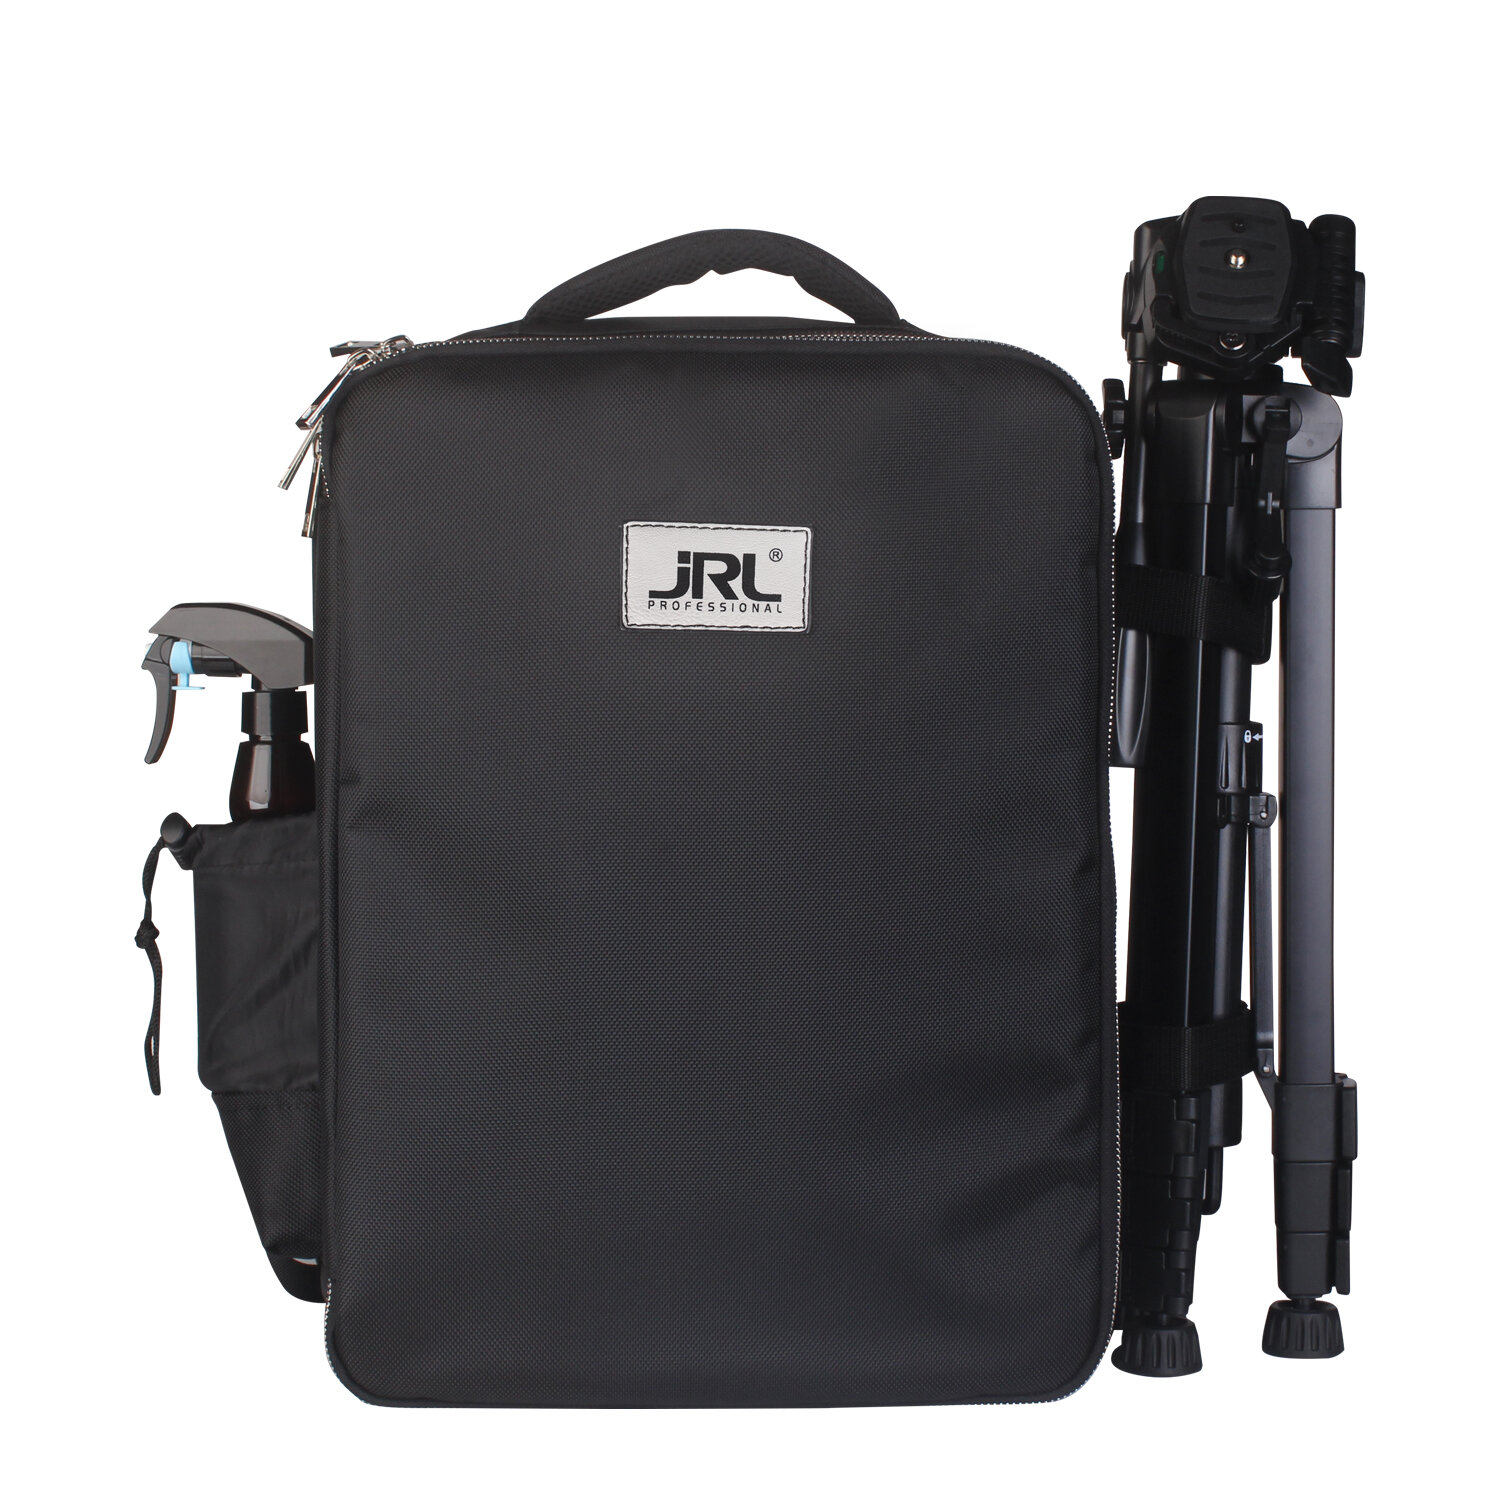 JRL Τσάντα Backpack Barber - Μεγάλο Premium σακίδιο πλάτης 962020-0